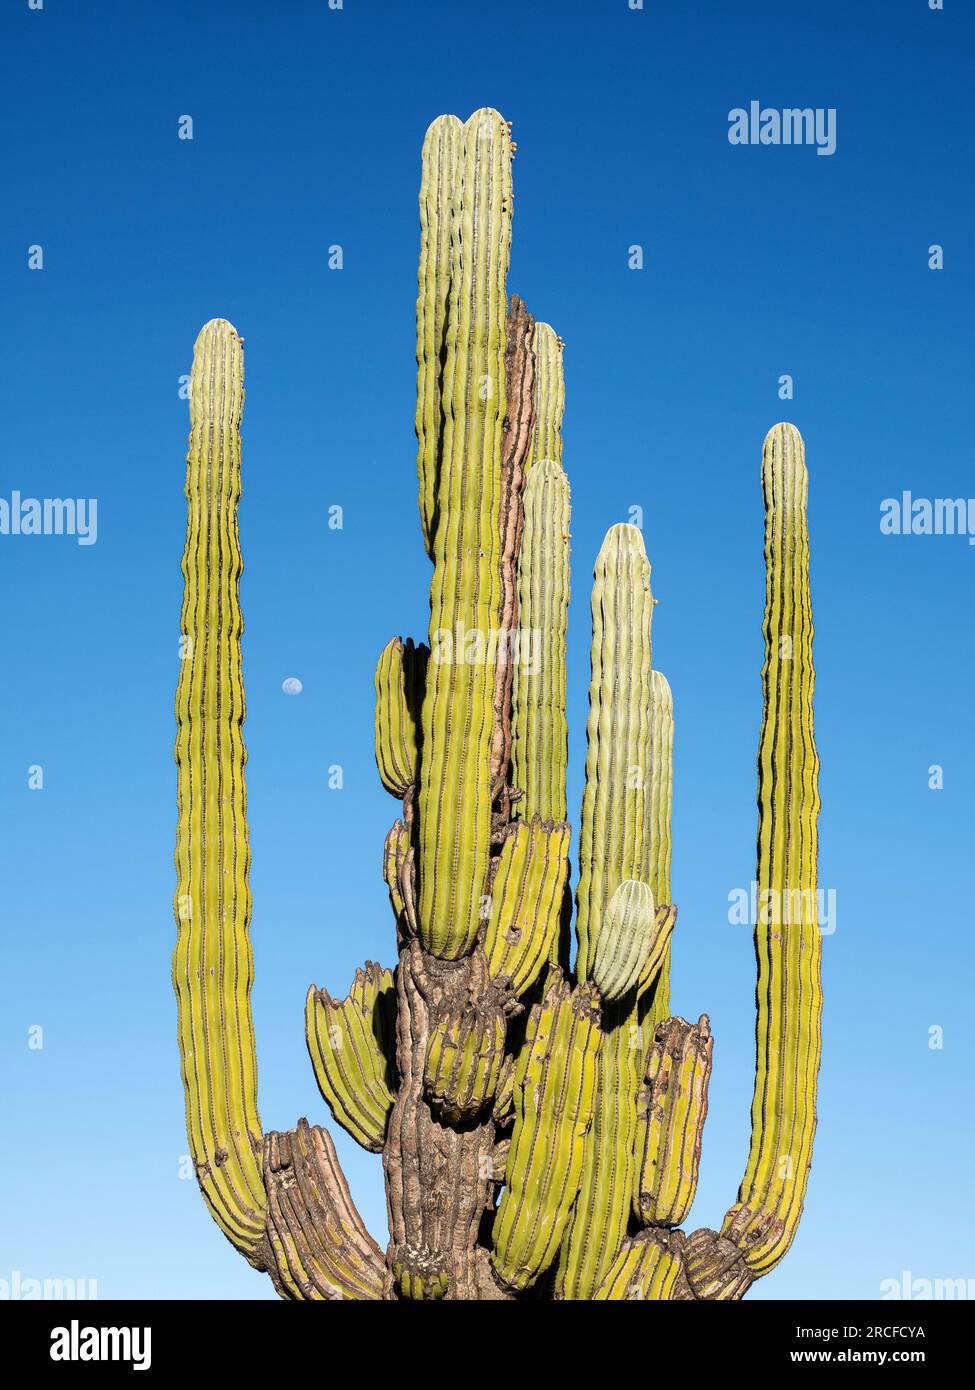 Cardon cactus, Pachycereus pringlei, with nearly full moon in Bahia de los Angeles, Baja California, Mexico. Stock Photo